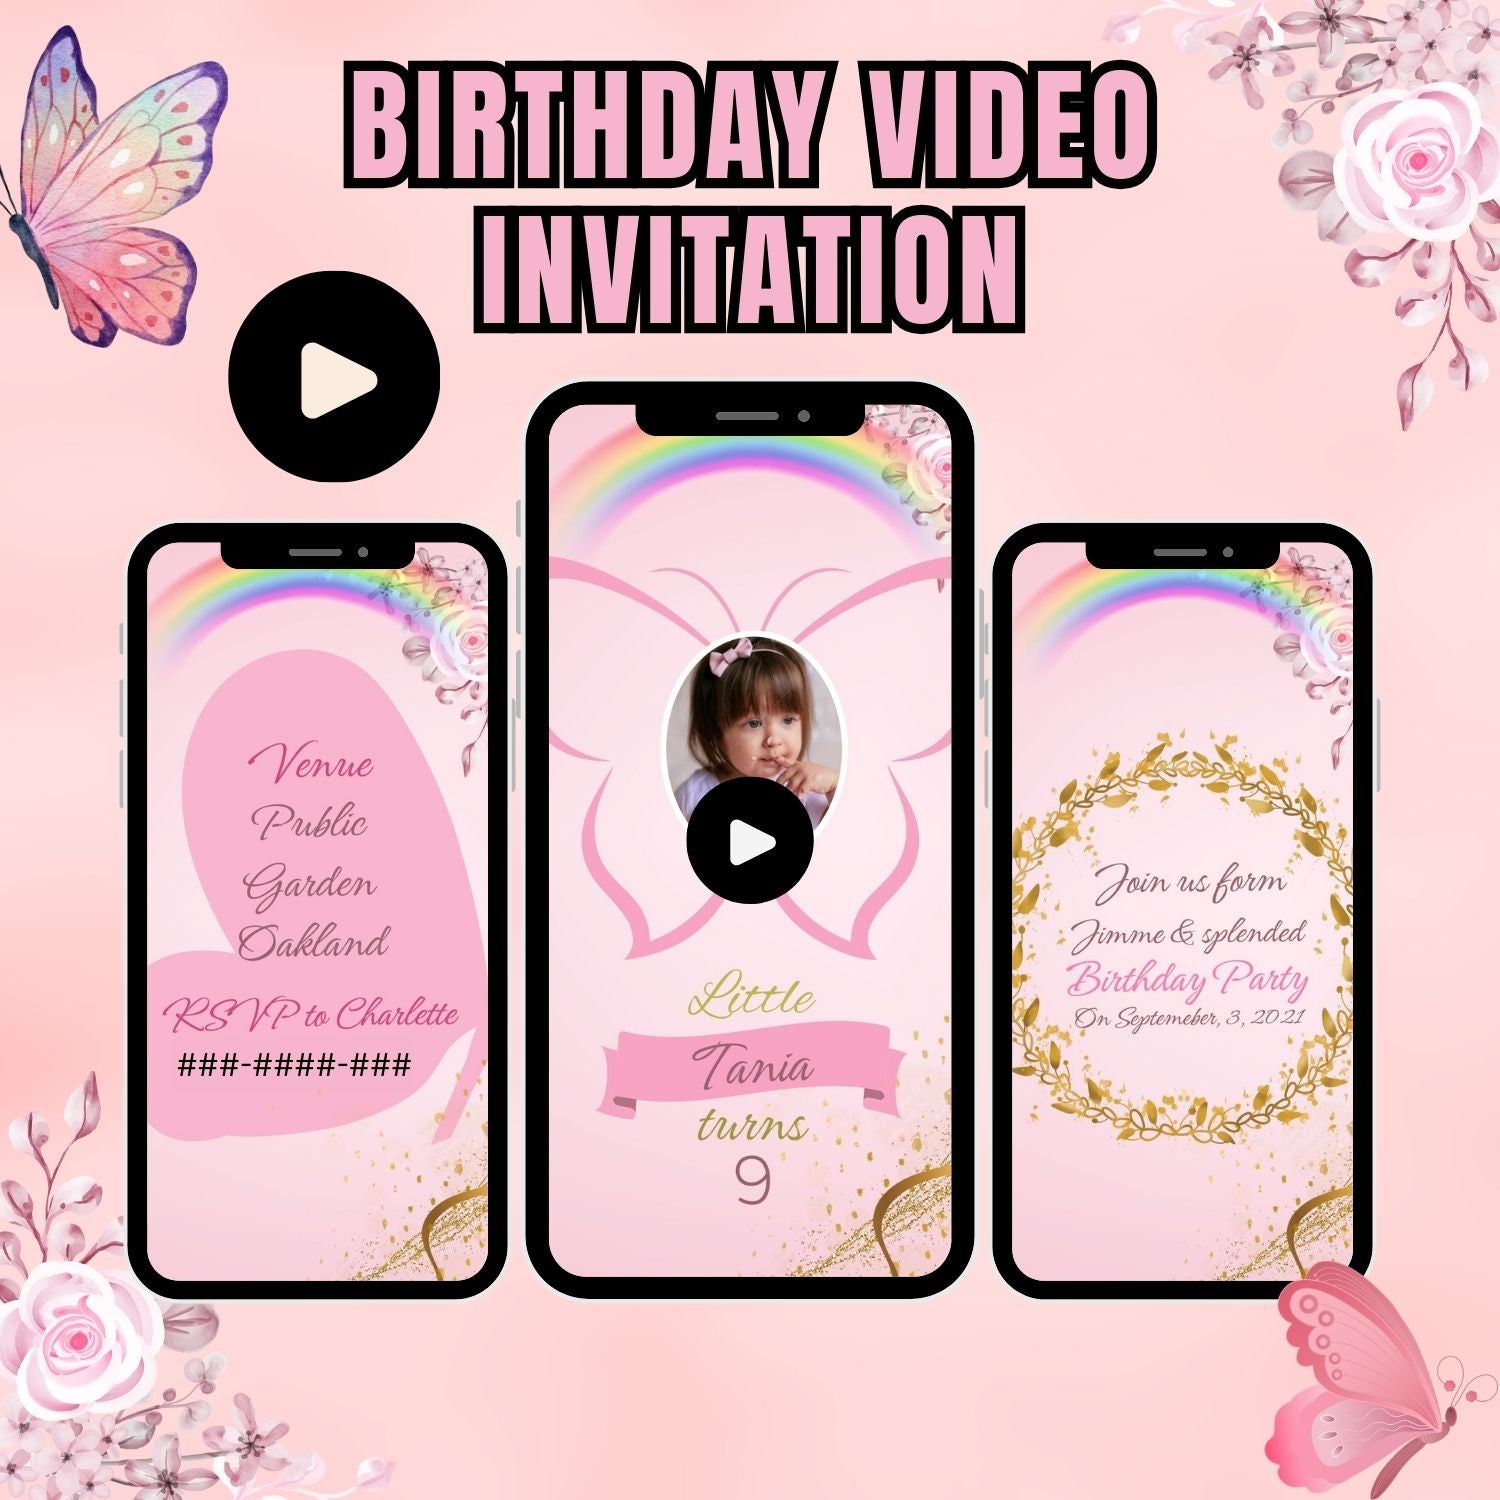 Butterfly Birthday Video Invitation - Girl's Pink Butterfly Birthday Invitation